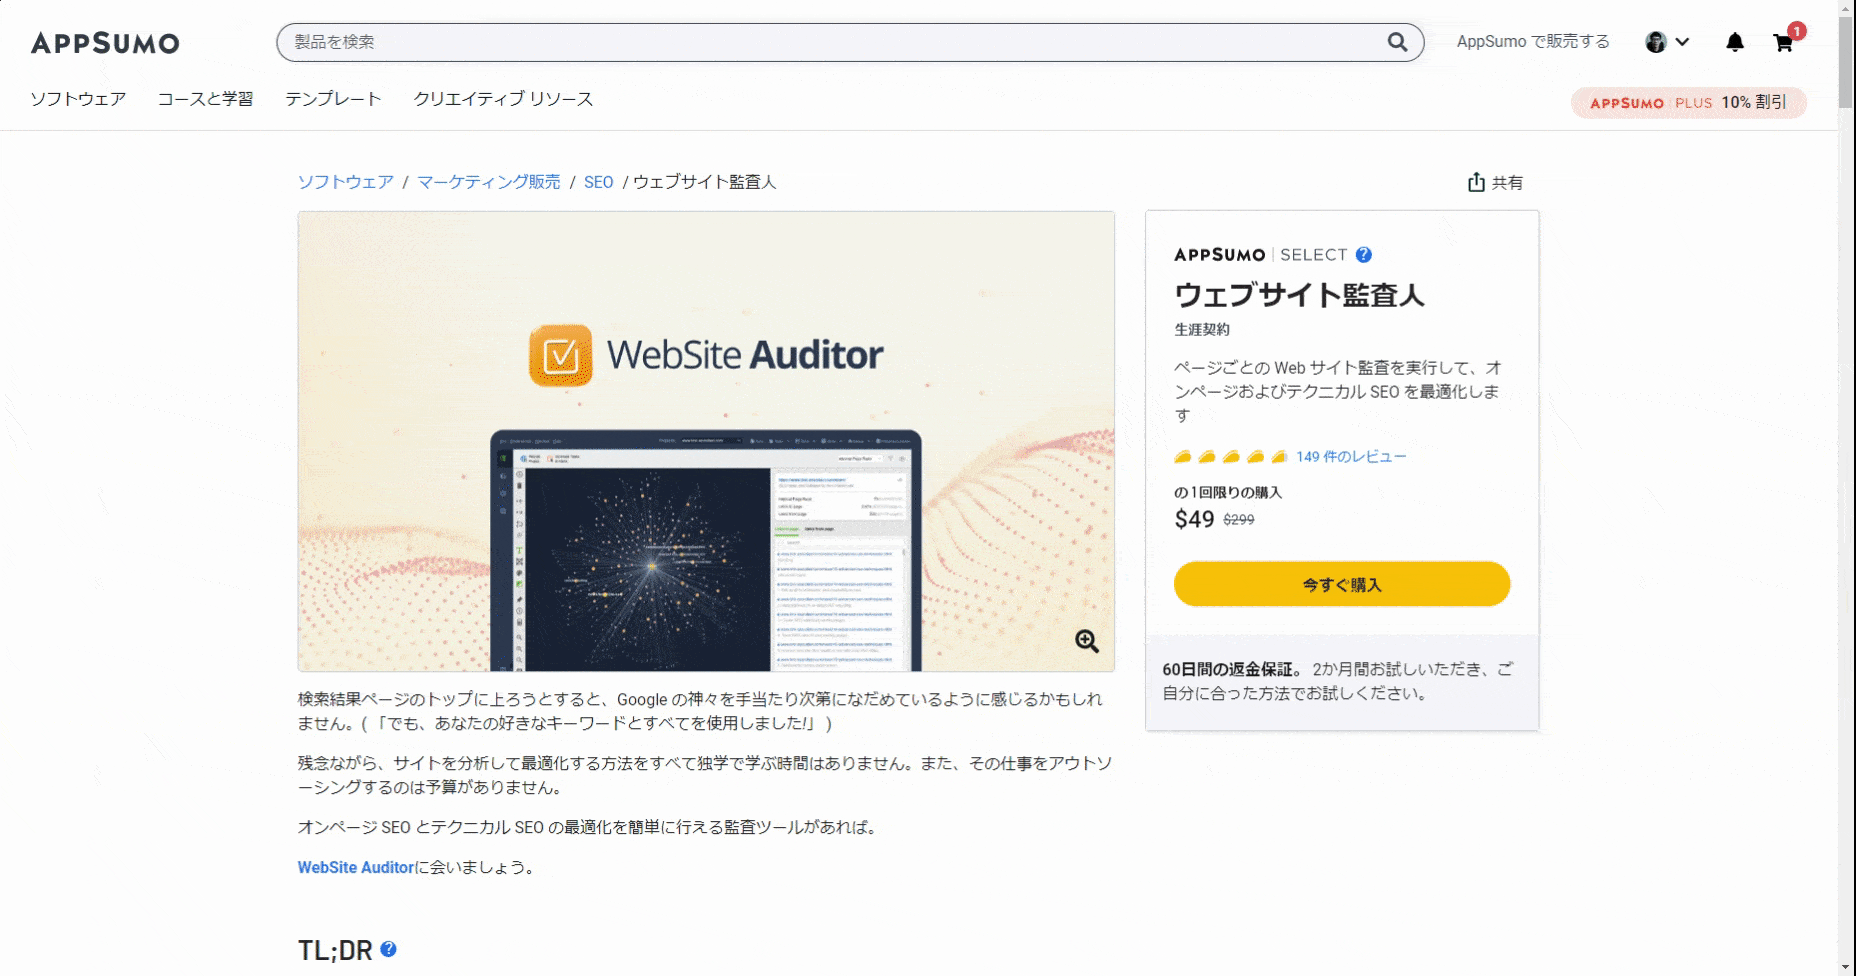 AppSumo Translation